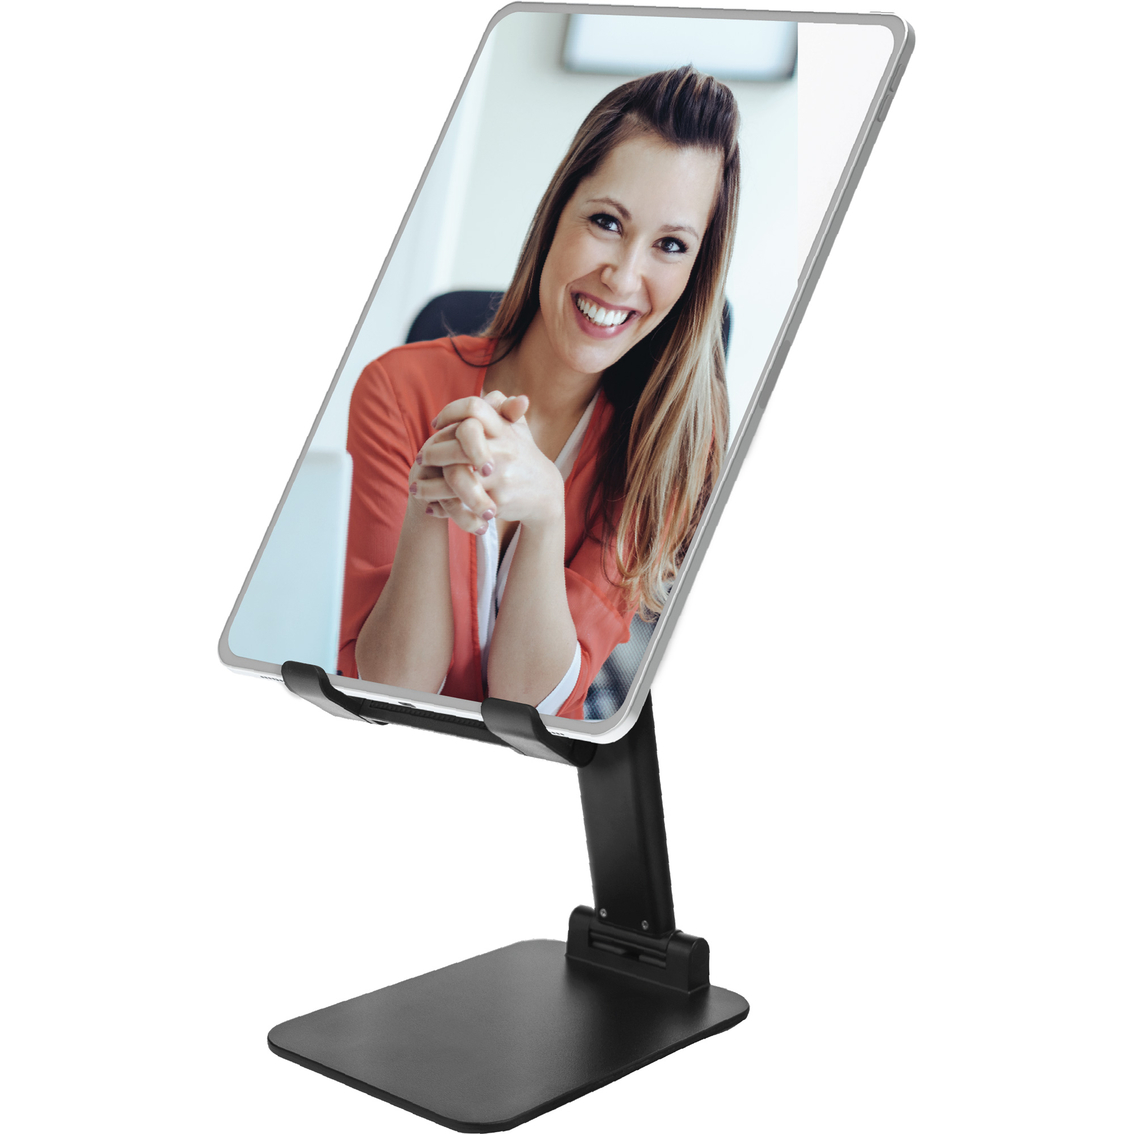 Digipower Foldable & Adjustable Compact Desktop Tablet Stand Holder - Image 2 of 5